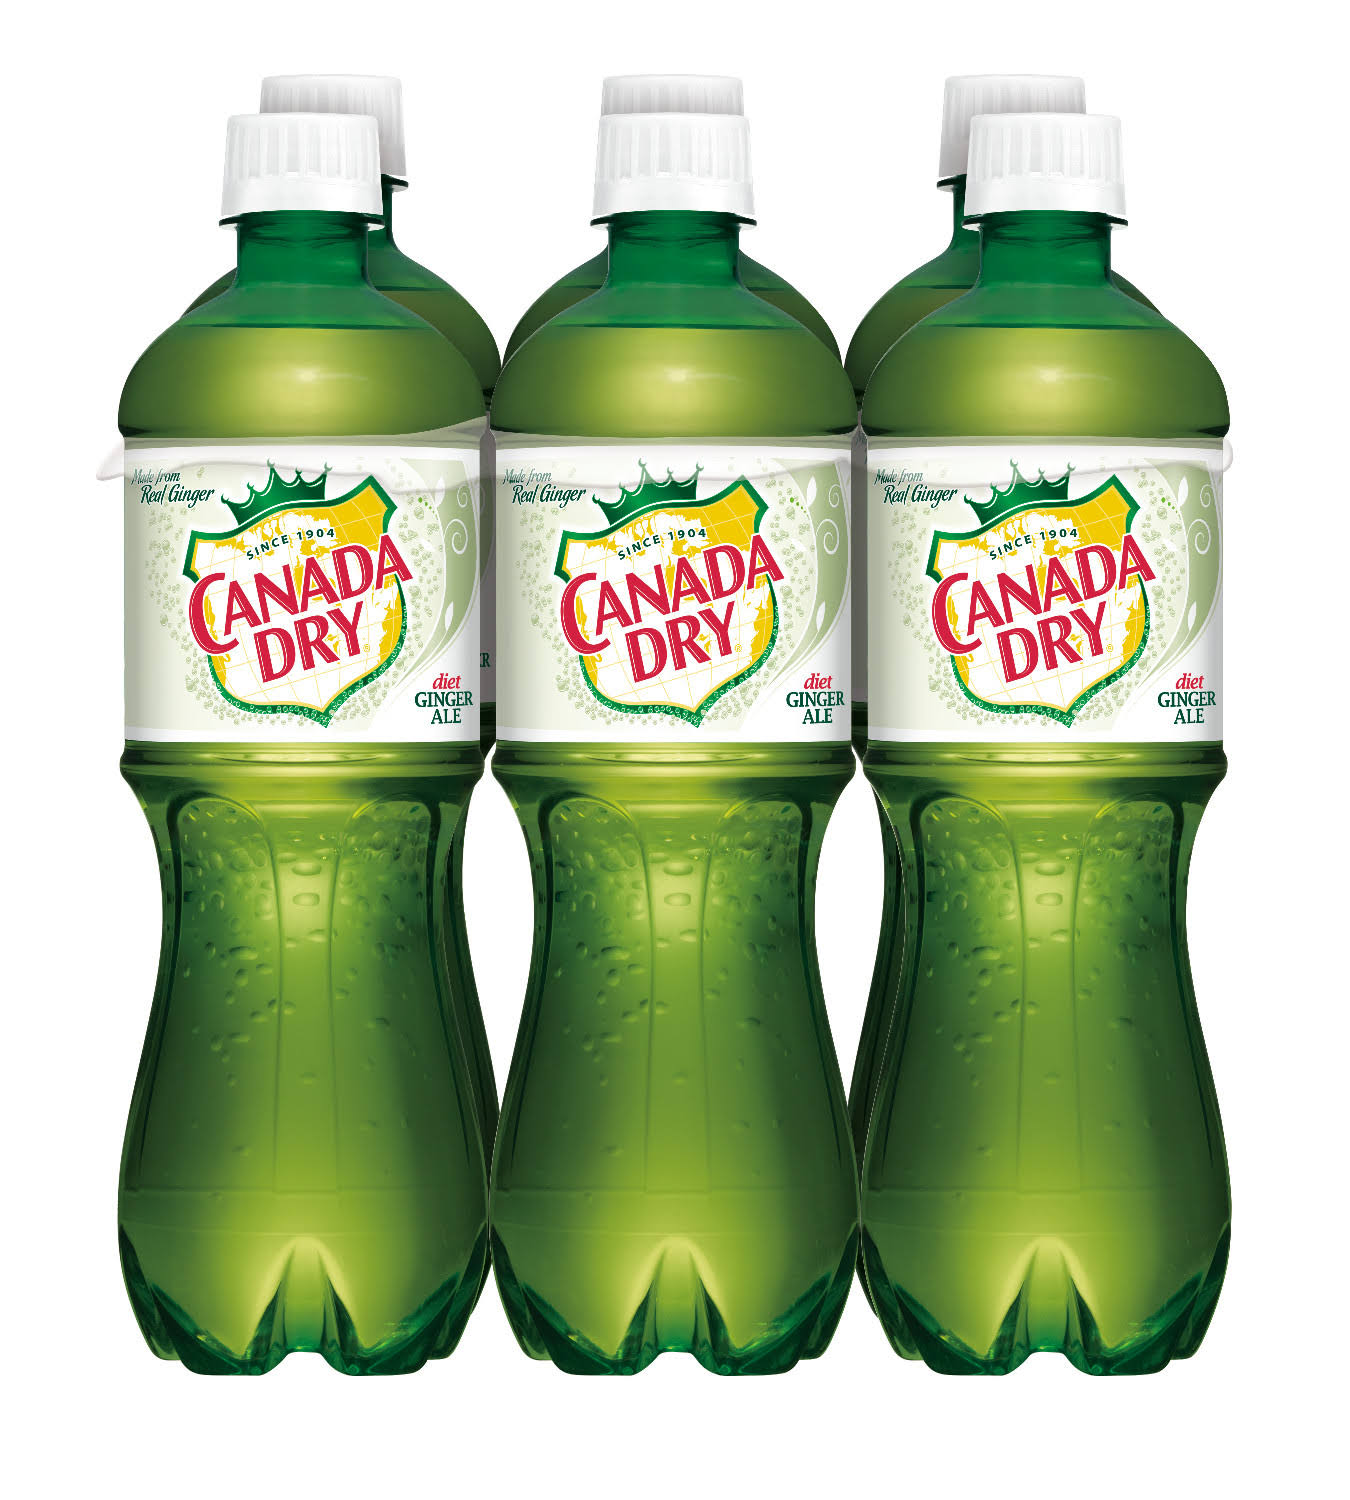 Canada Dry Ginger Ale, Zero Sugar, 6 Pack - 6 pack, 16.9 fl oz bottles